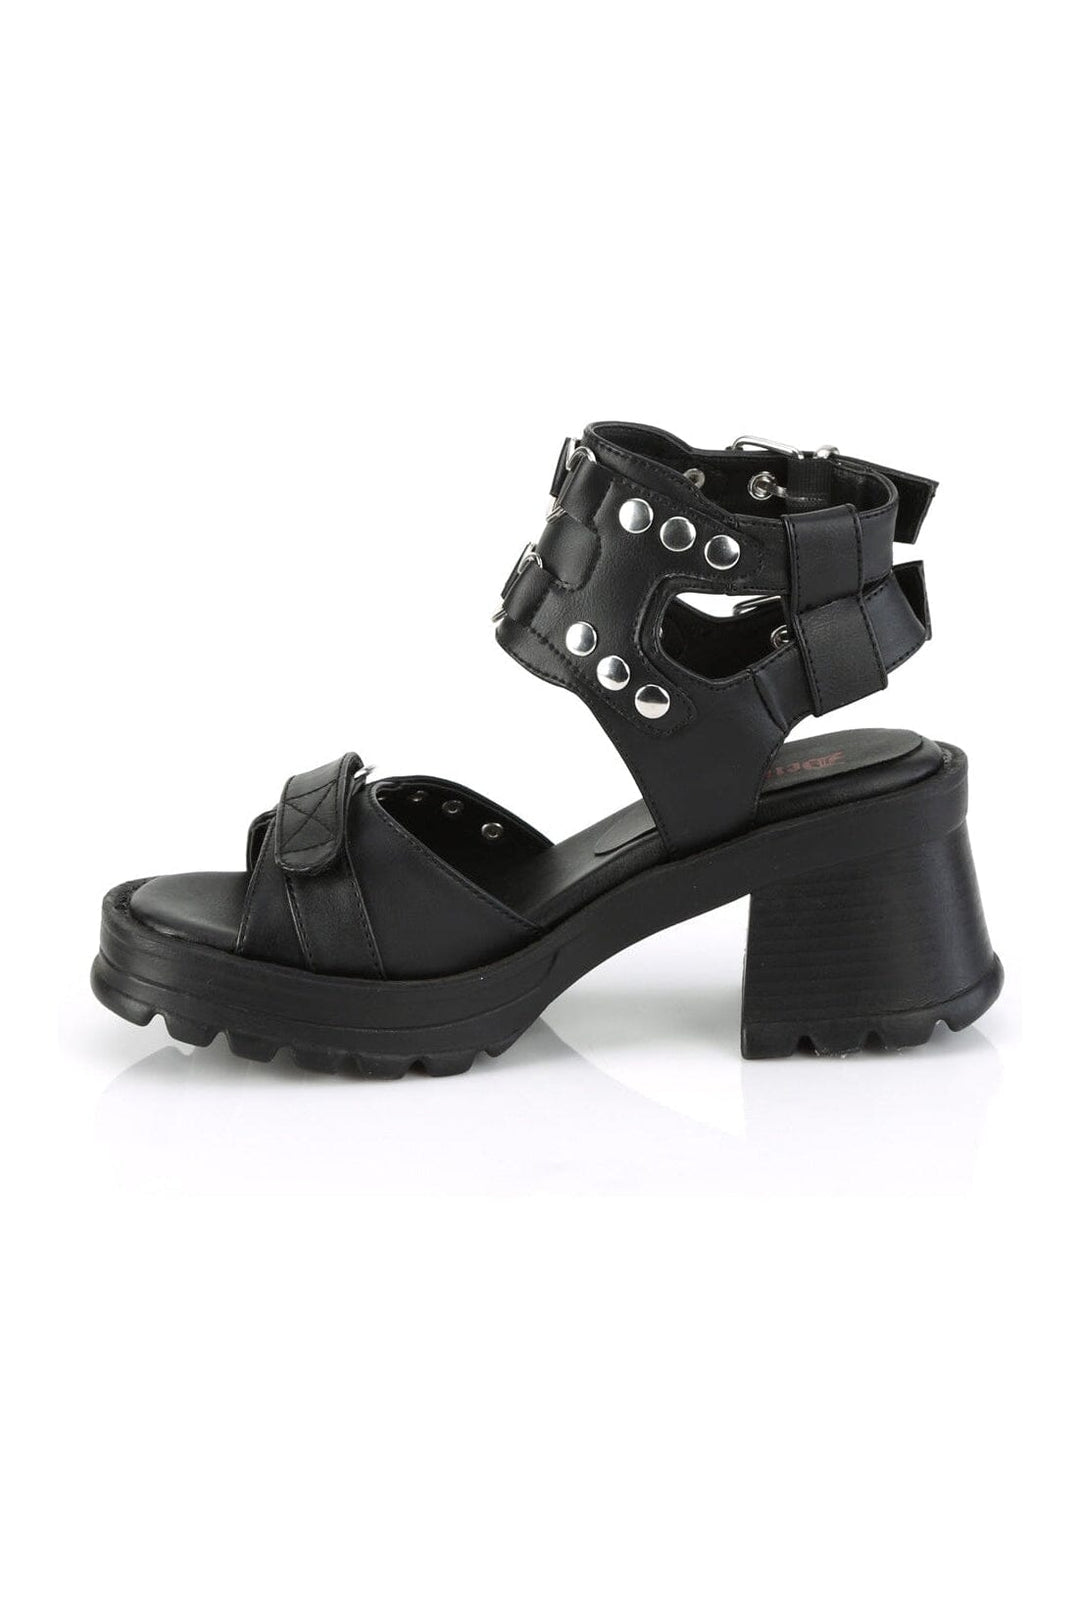 BRATTY-07 Black Vegan Leather Sandal-Sandals-Demonia-SEXYSHOES.COM